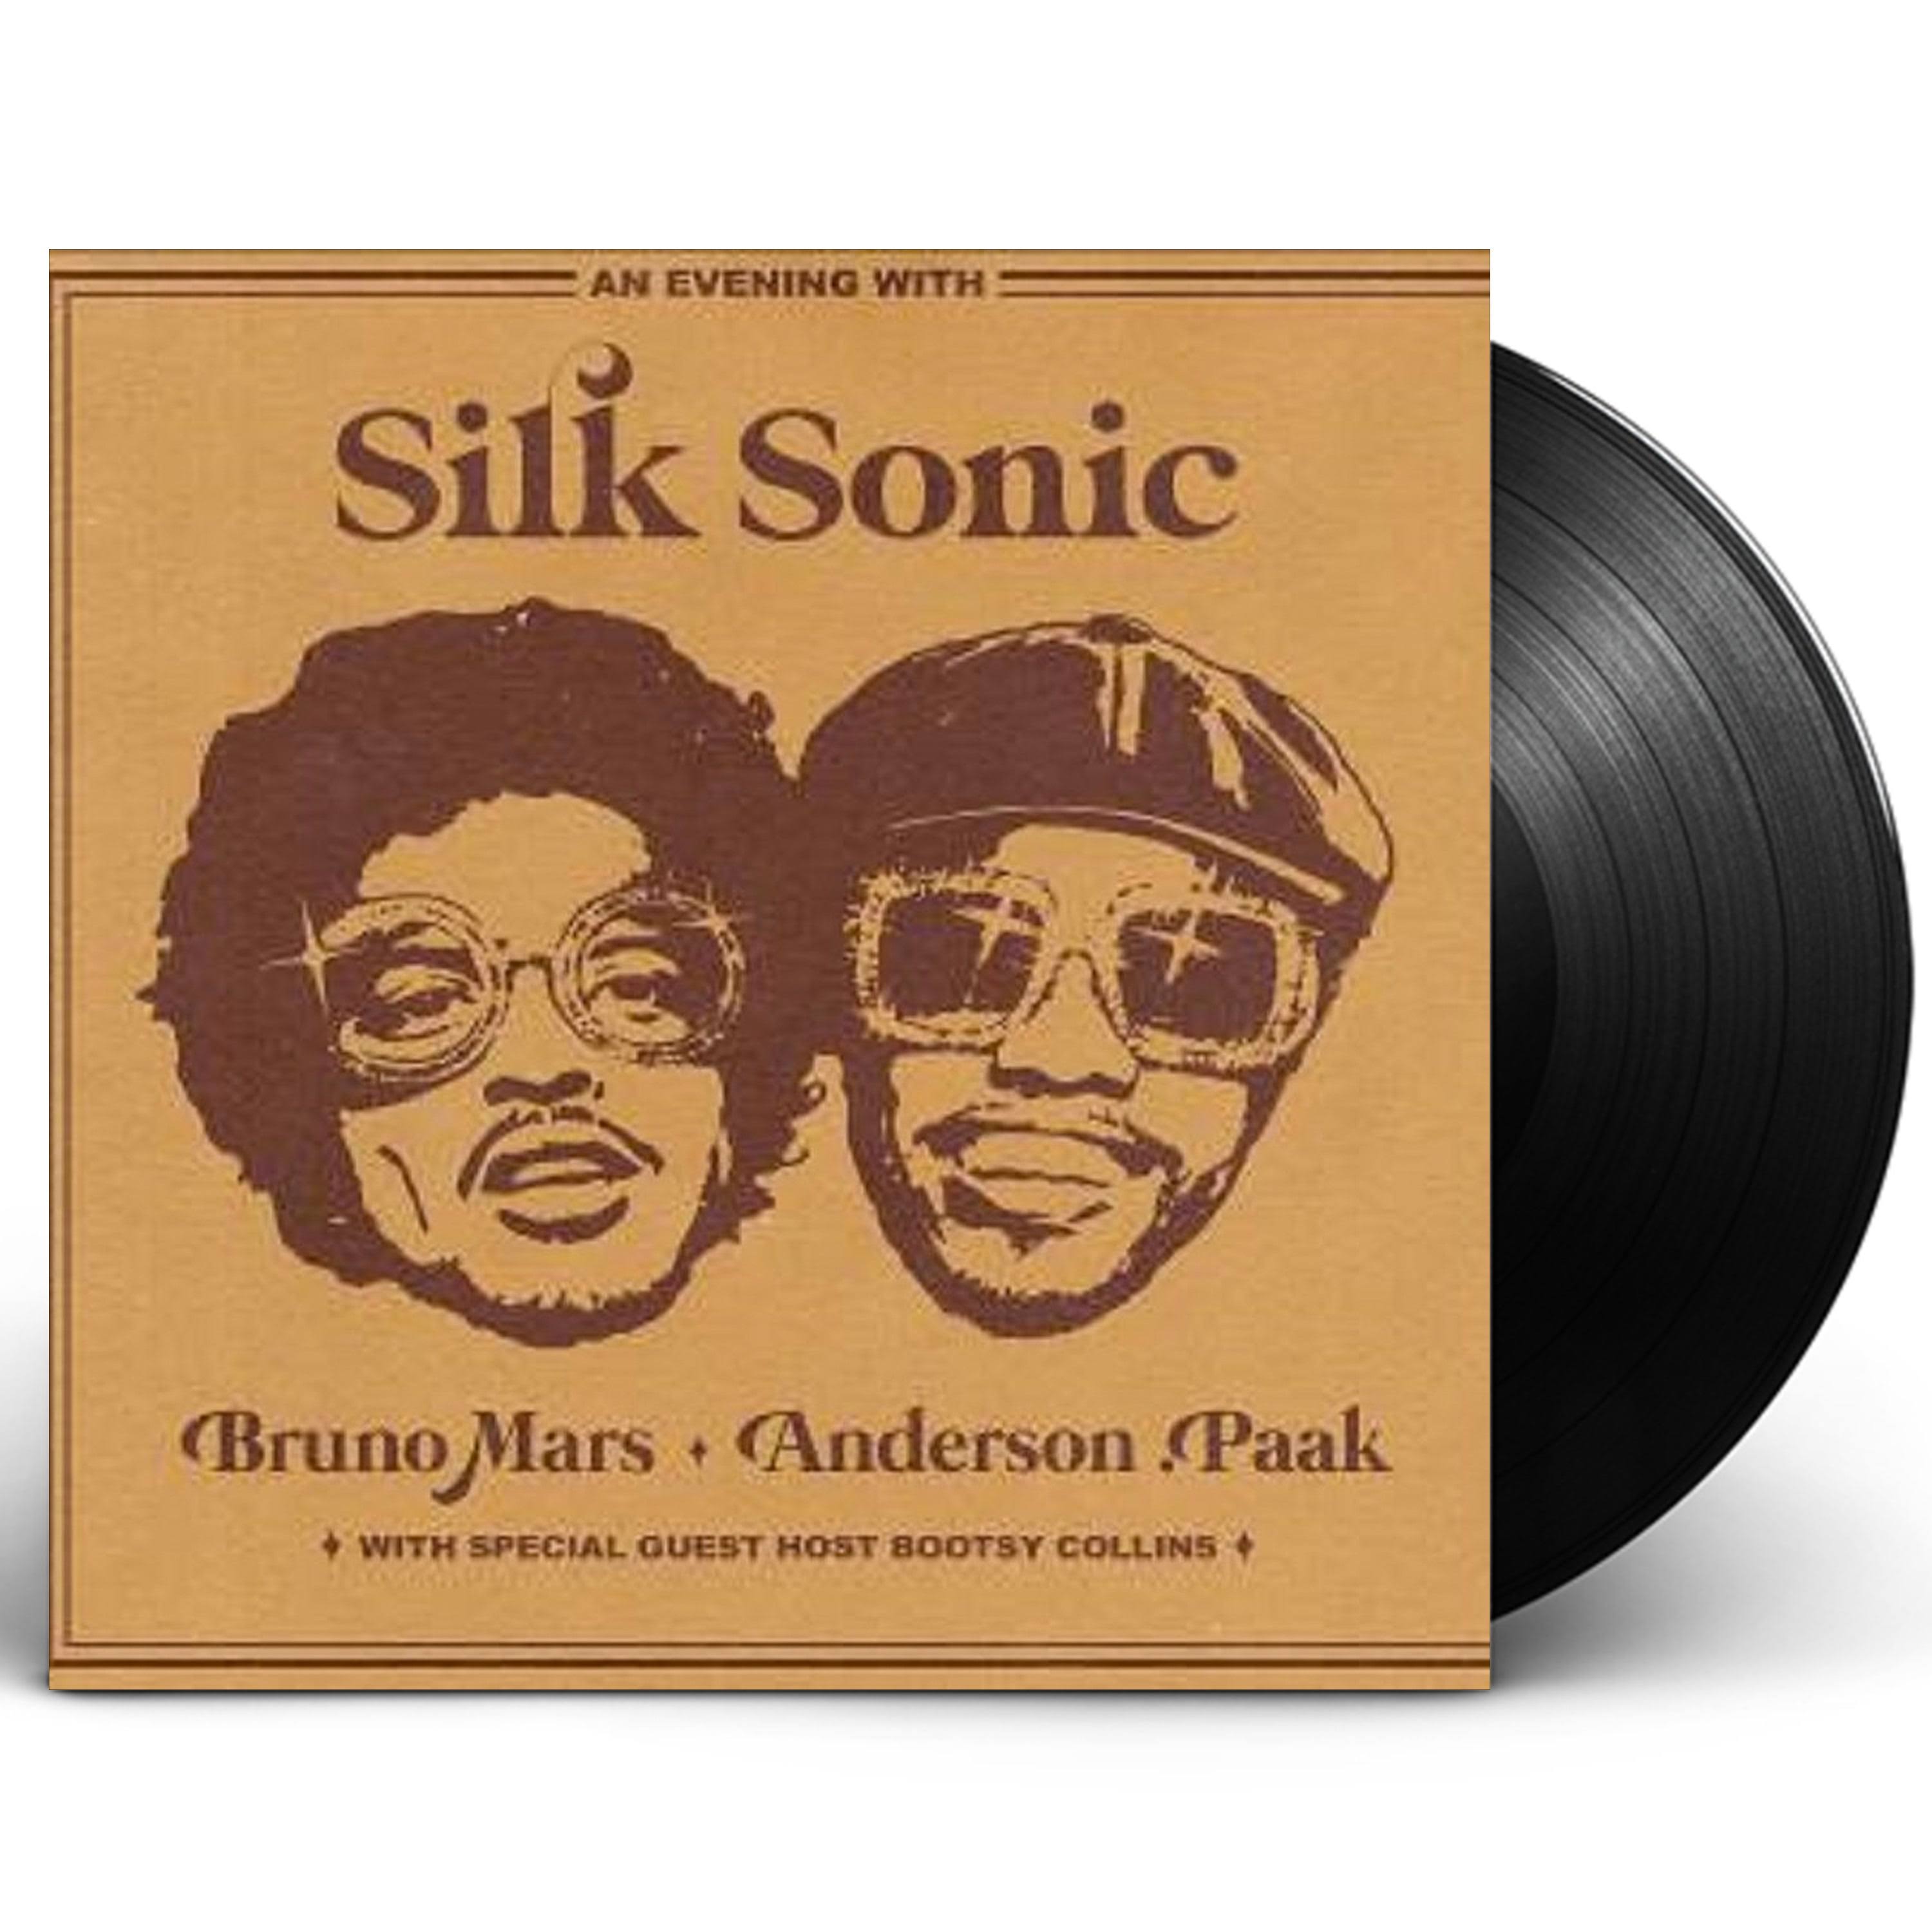 Silk Sonic - An Evening with Silk Sonic (Vinyl)